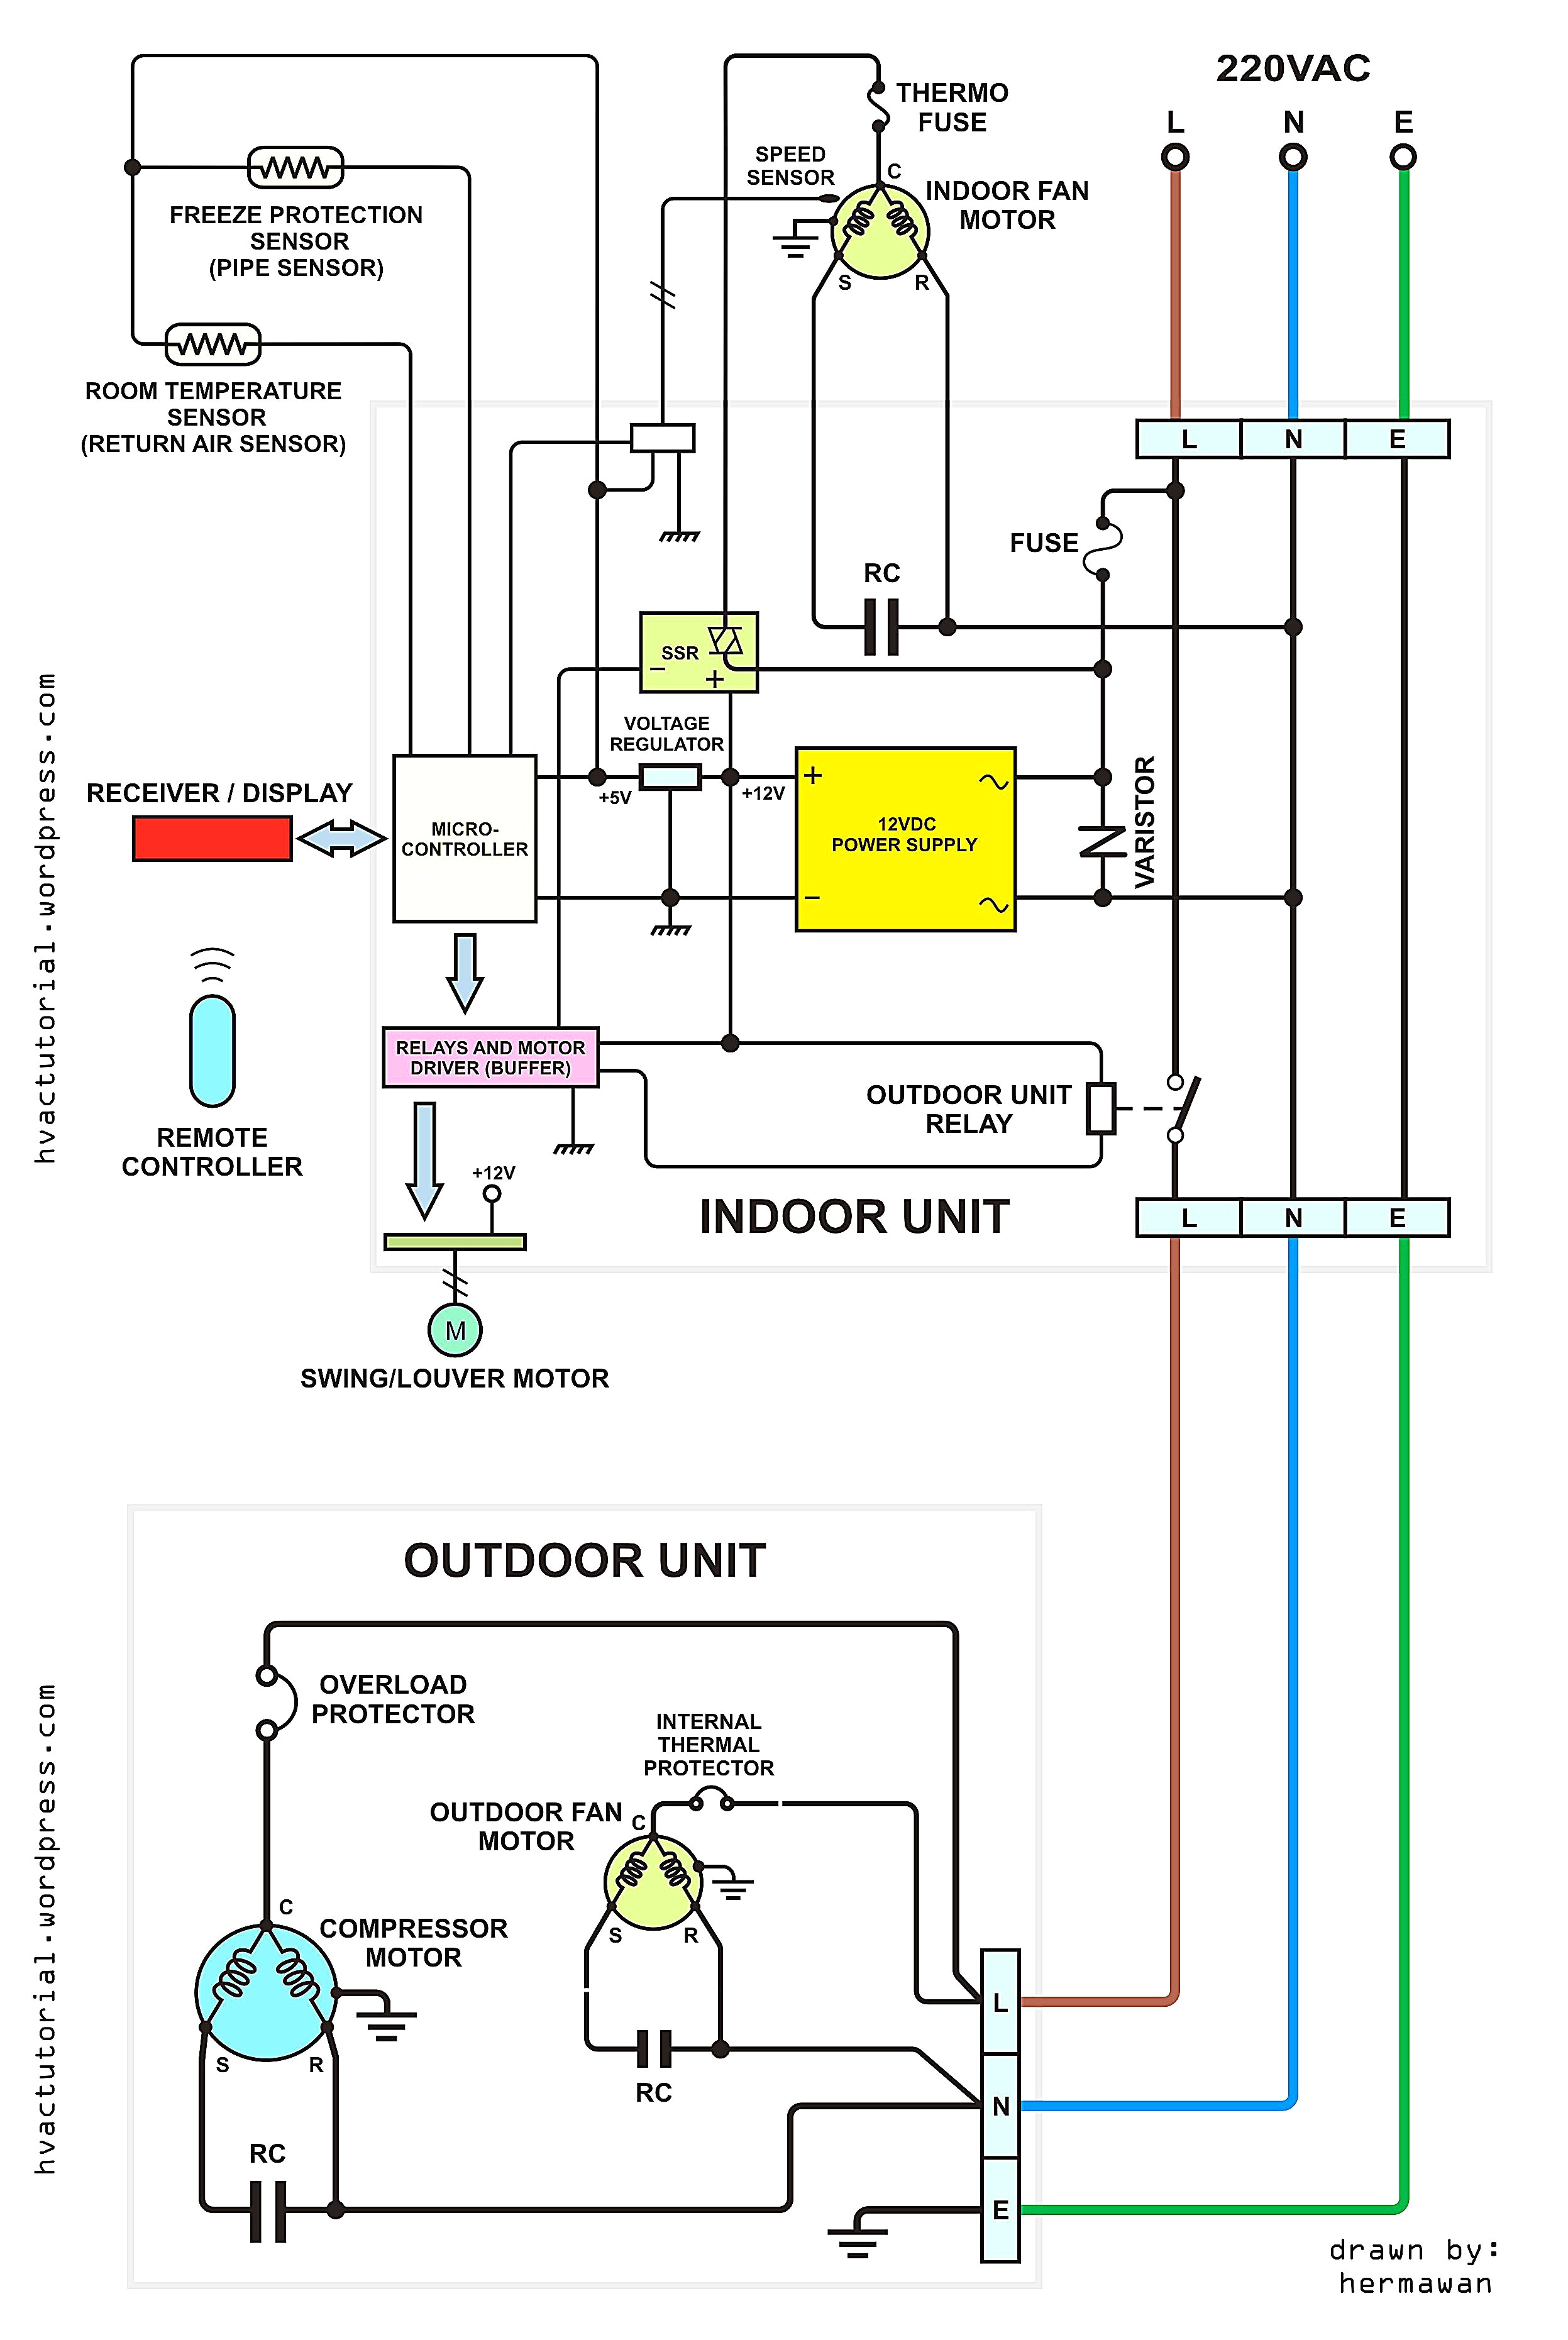 grundfos motor wiring diagram fresh grundfos pump motor wiring diagrams wiring diagram amp fuse box